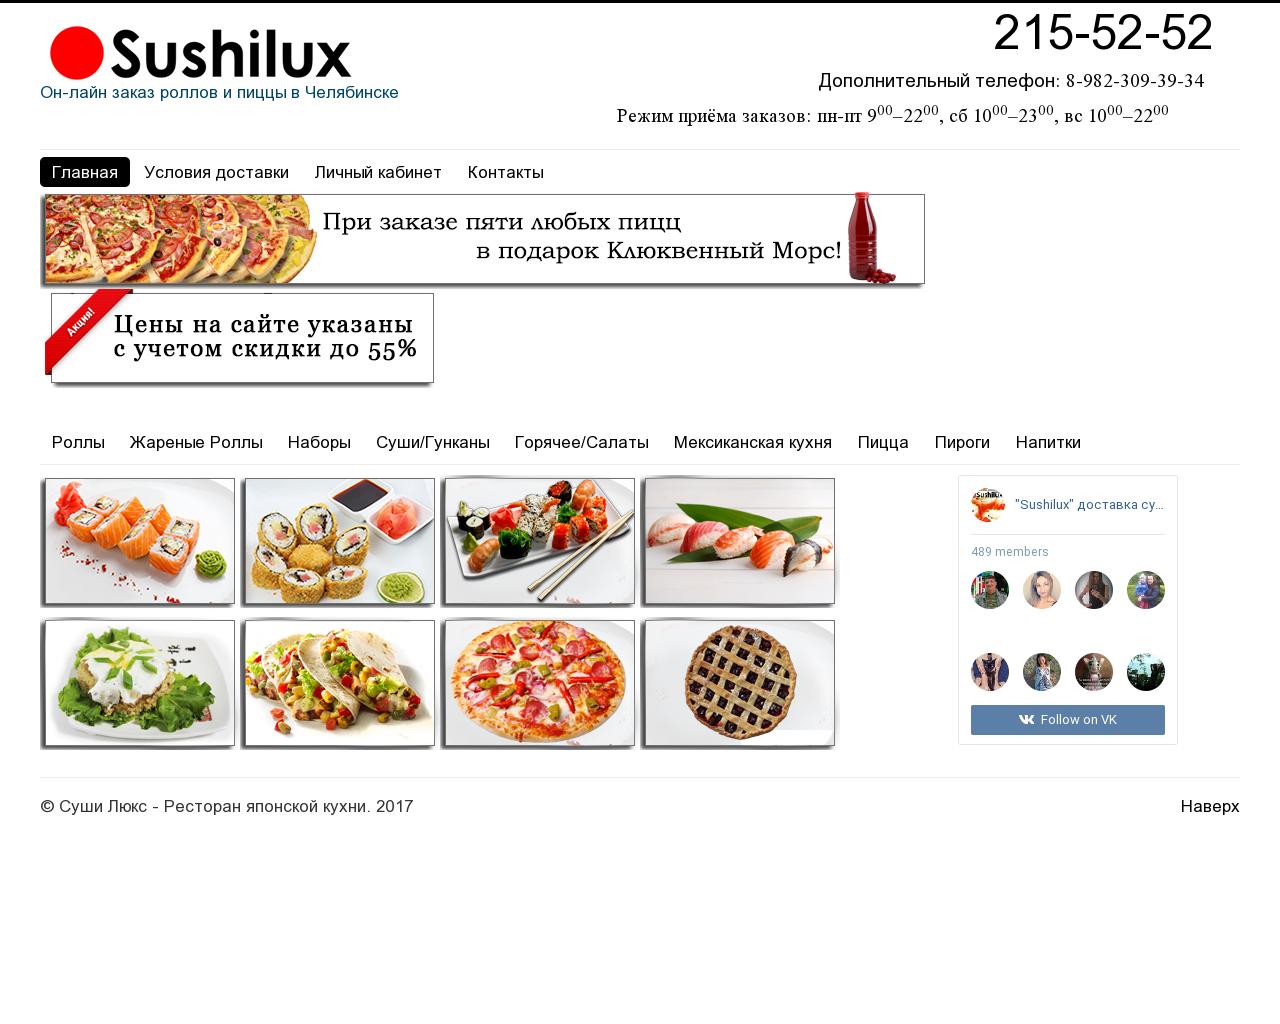 Изображение сайта sushi-lux.ru в разрешении 1280x1024